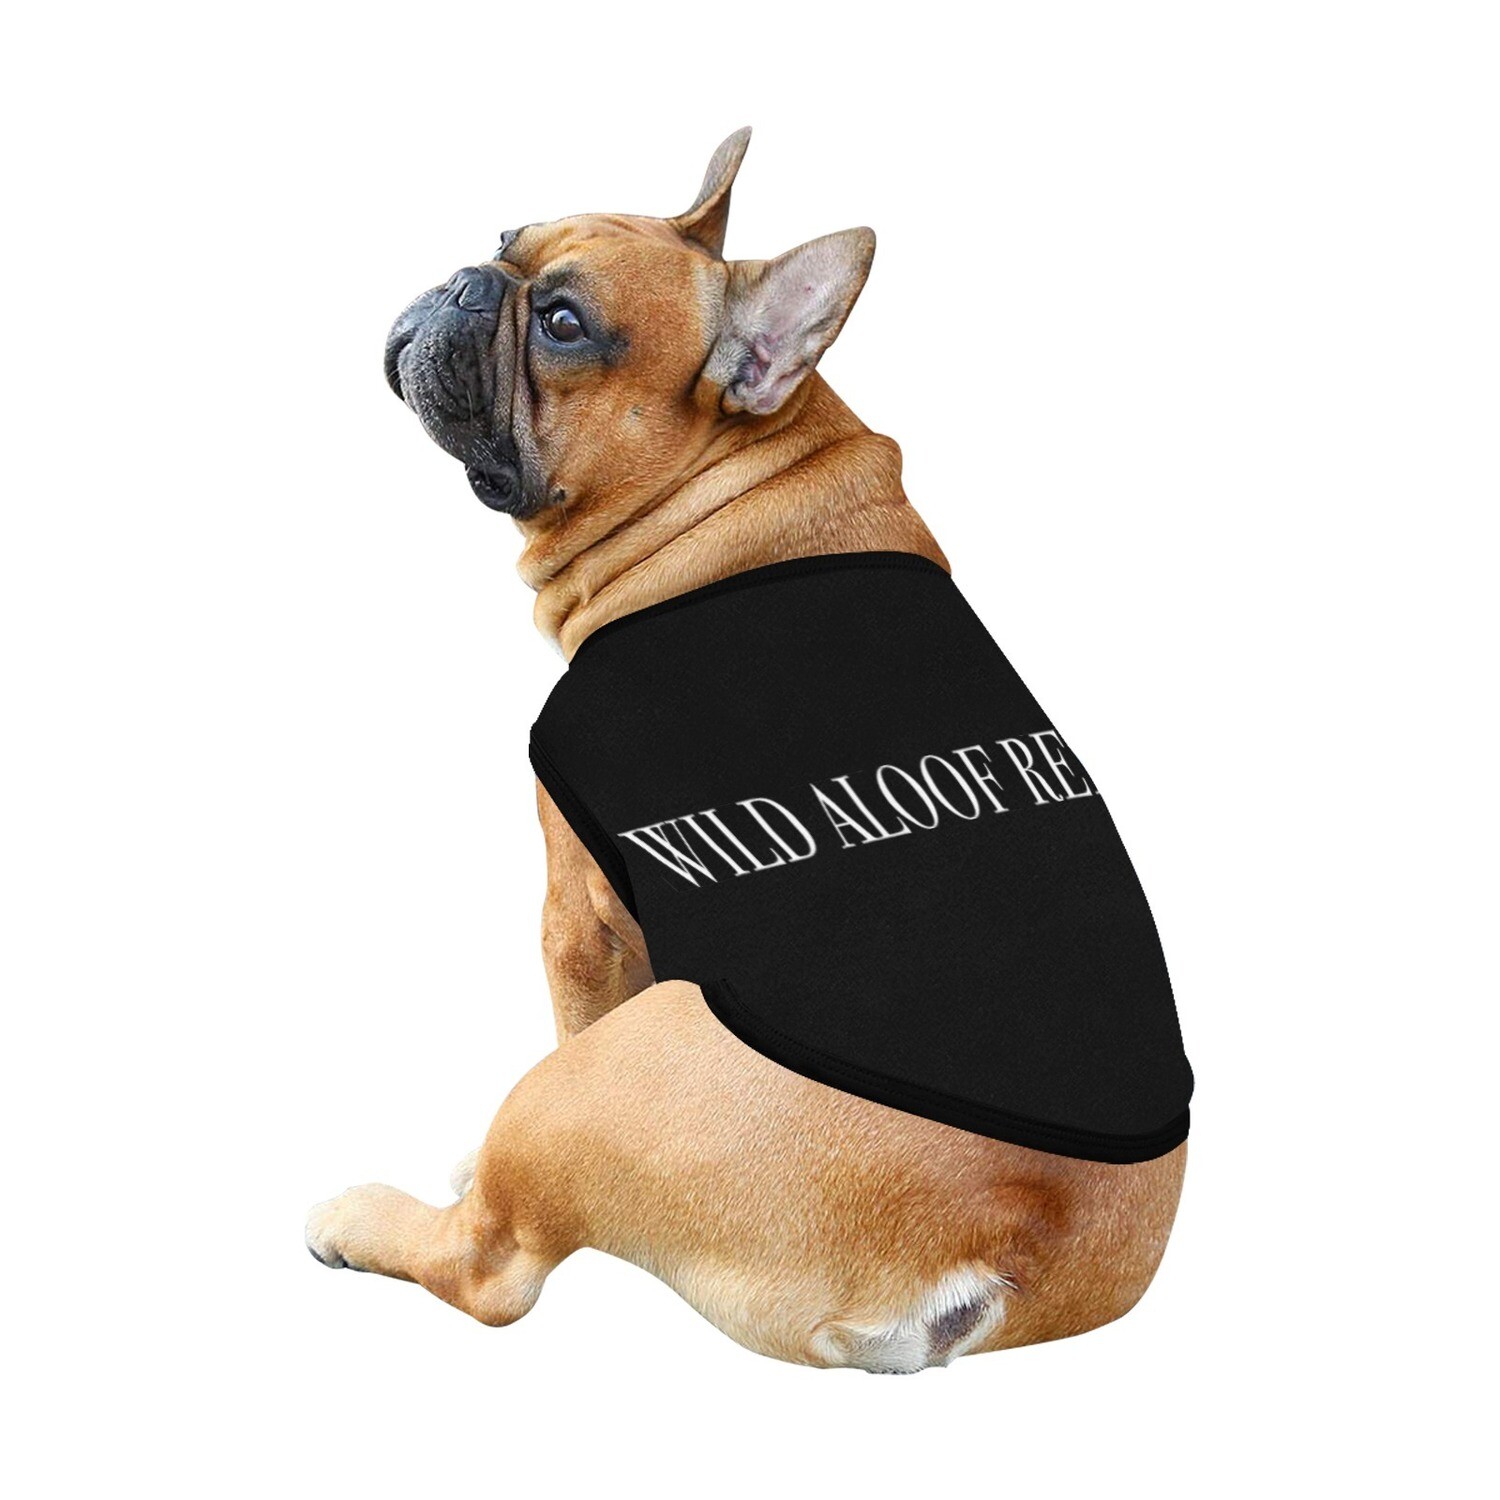 🐕 David Rose Wild Aloof Rebel Dog t-shirt, Dog Tank Top, Dog shirt, Dog clothes, Gifts, front back print, 7 sizes XS to 3XL, Schitt's Creek, TV series